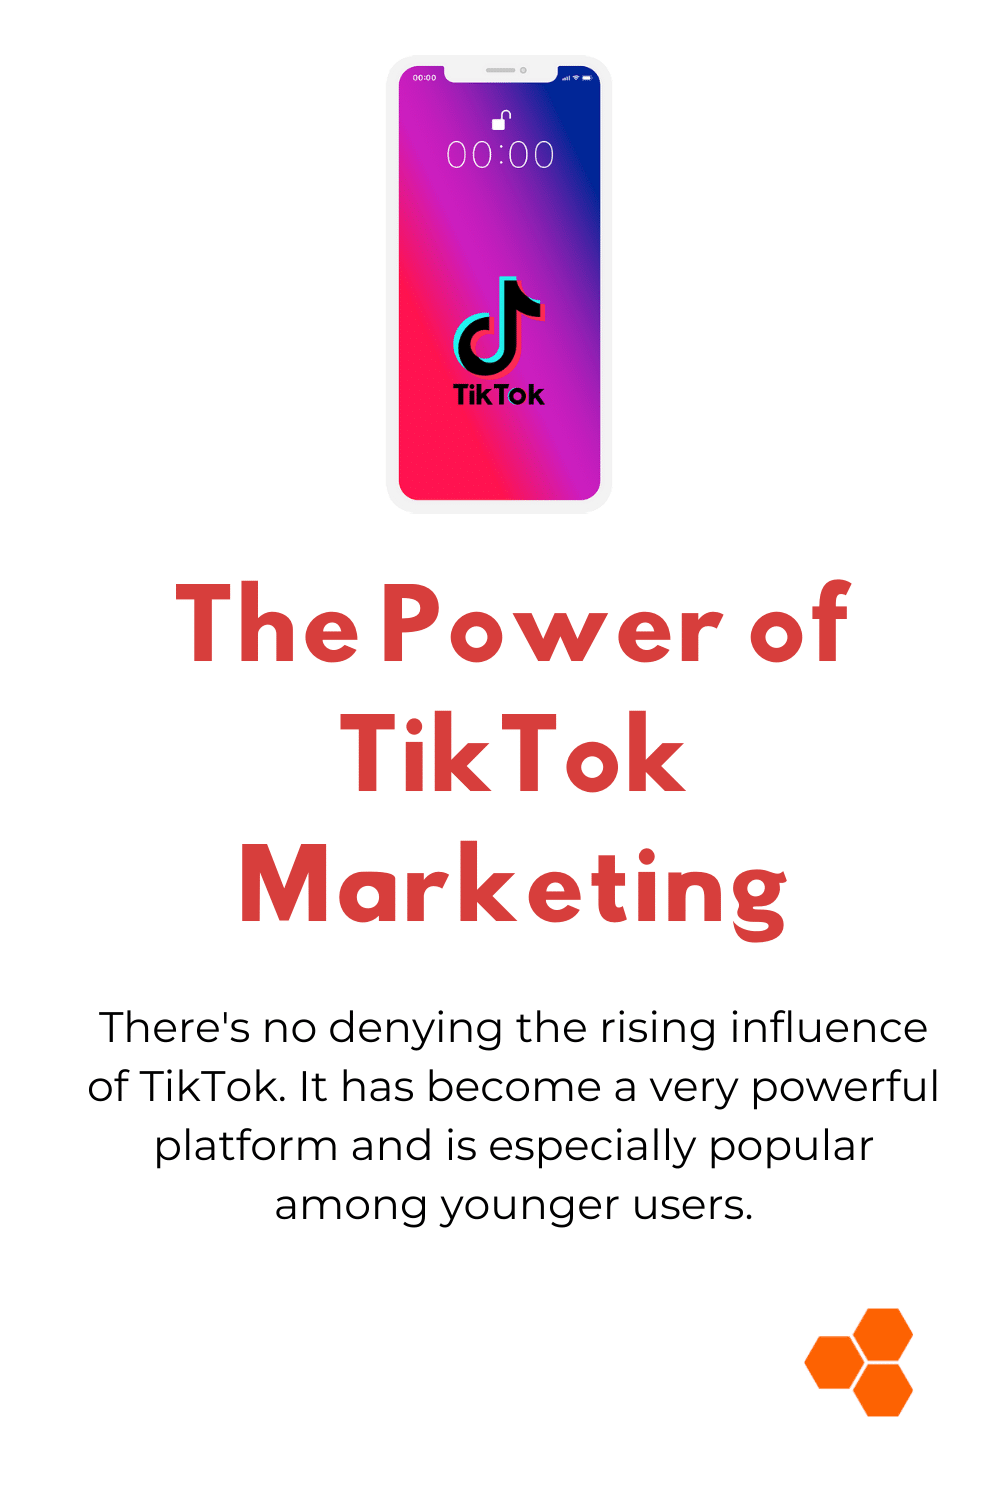 The Power of TikTok Marketing [Infographic]